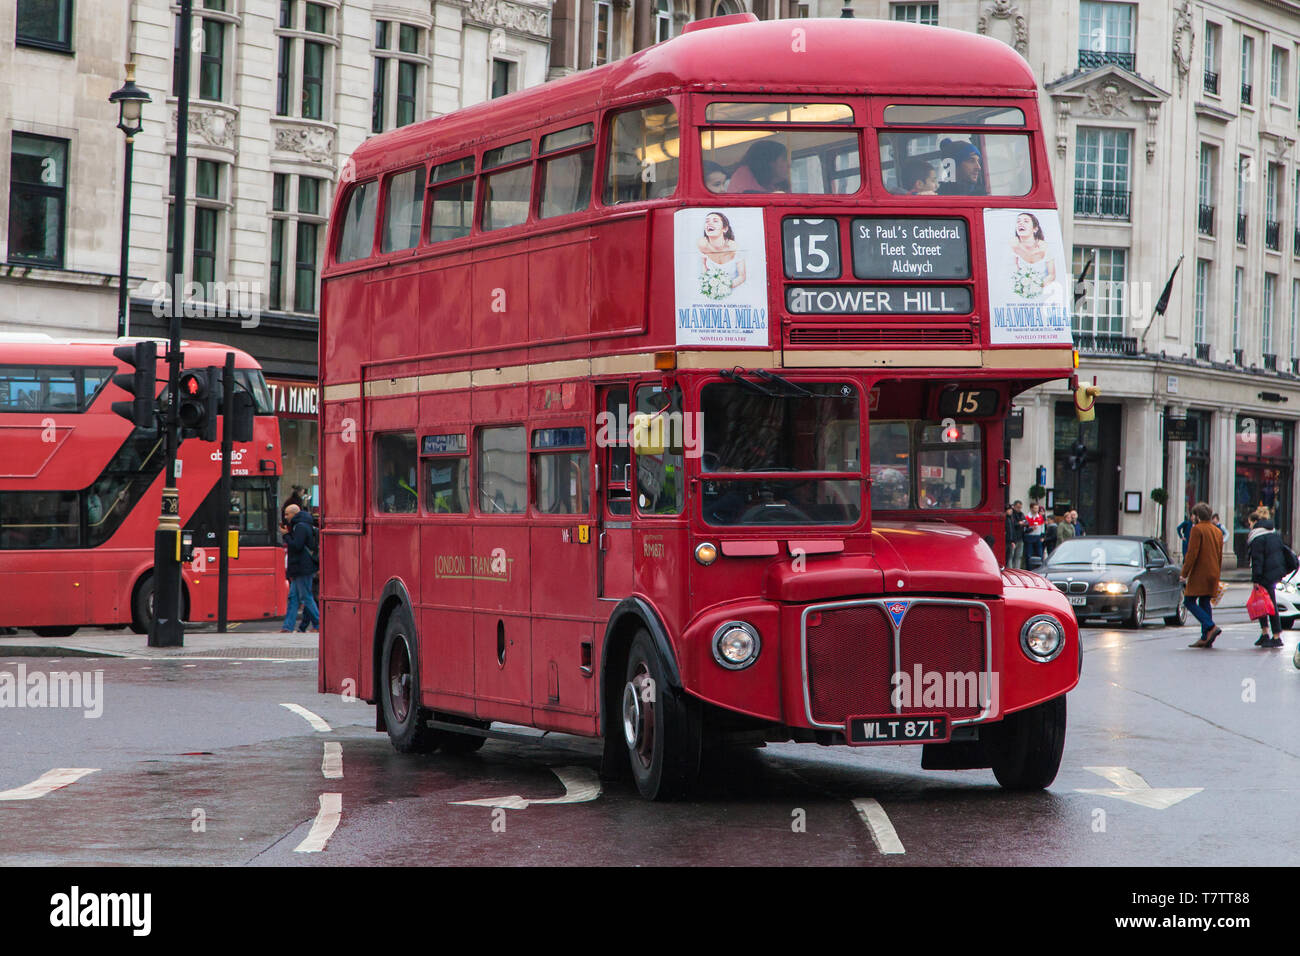 London, United Kingdom - December 23, 2019: 1962 AEC Routemaster Bus travelling around Trafalgar Square heading towards Tower Hill on heritage route 1 Stock Photo